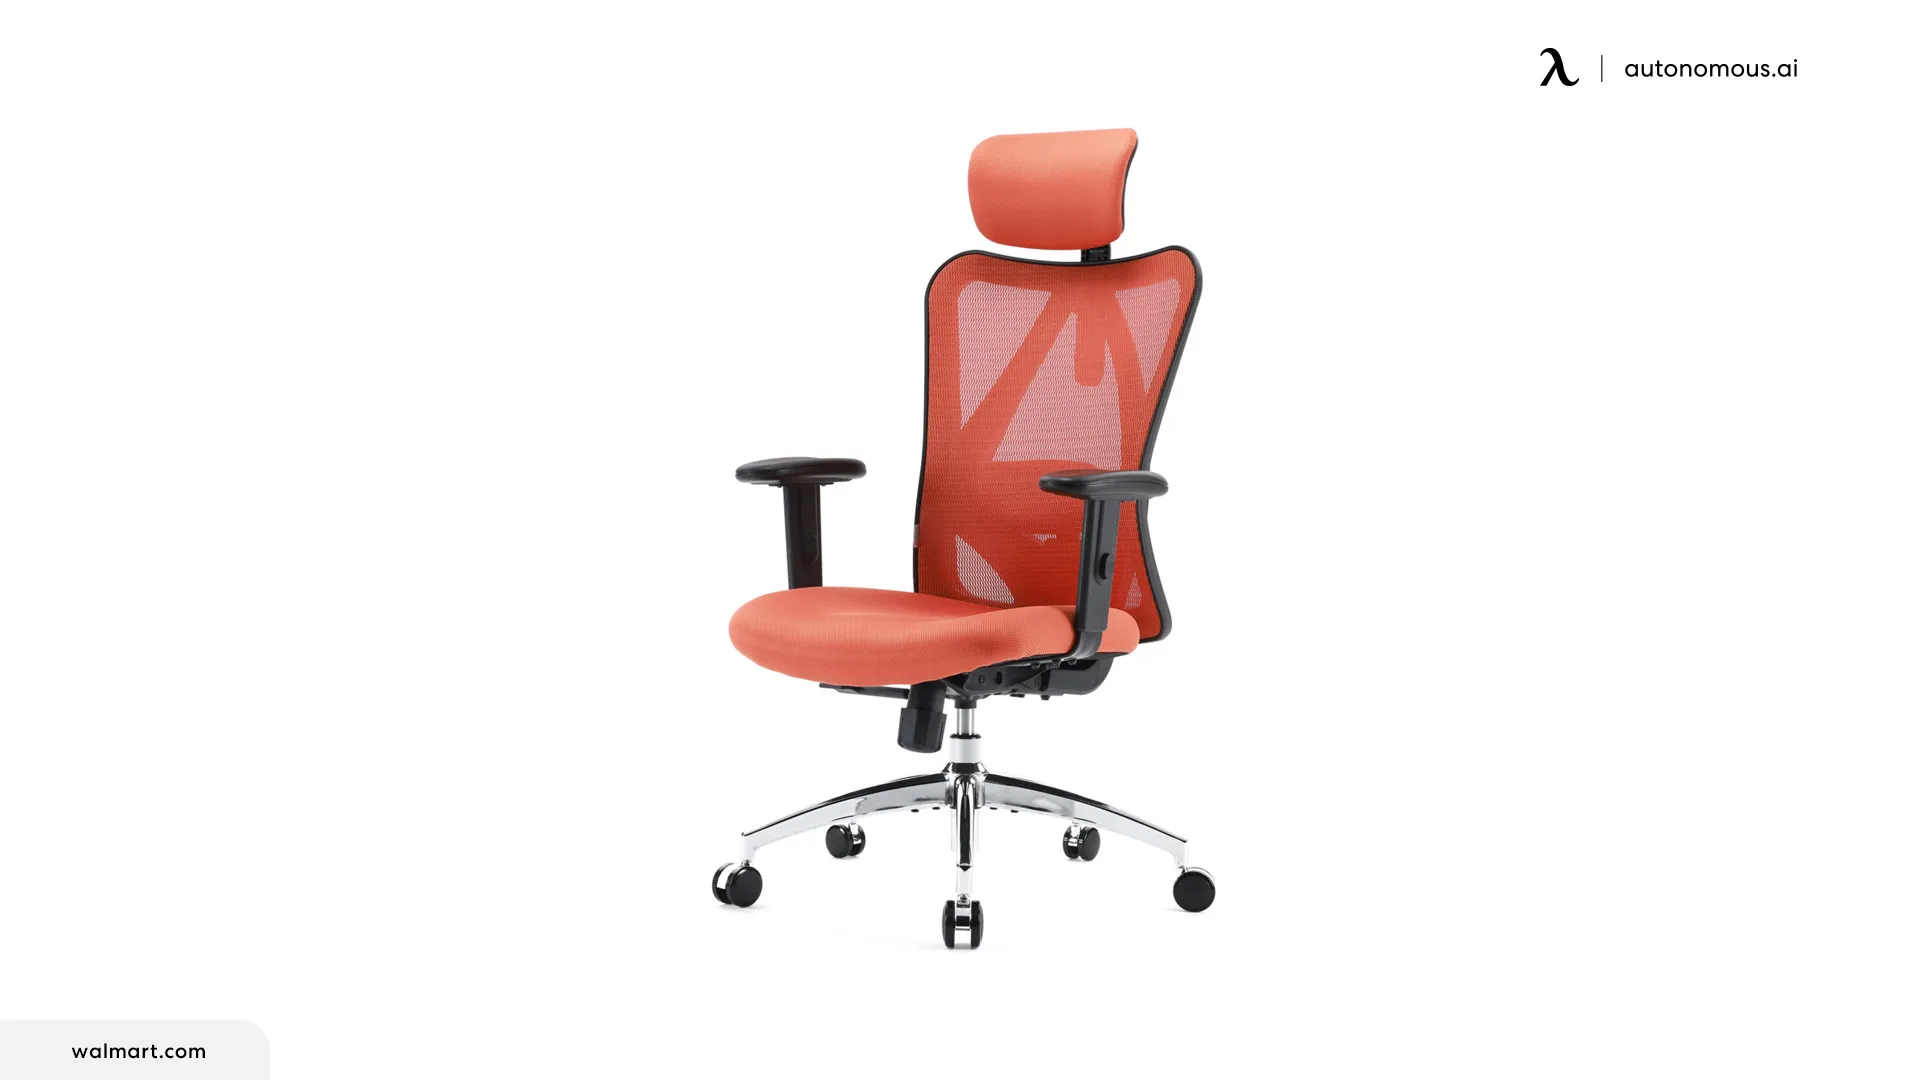 SIHOO Ergonomic High Back Office Chair